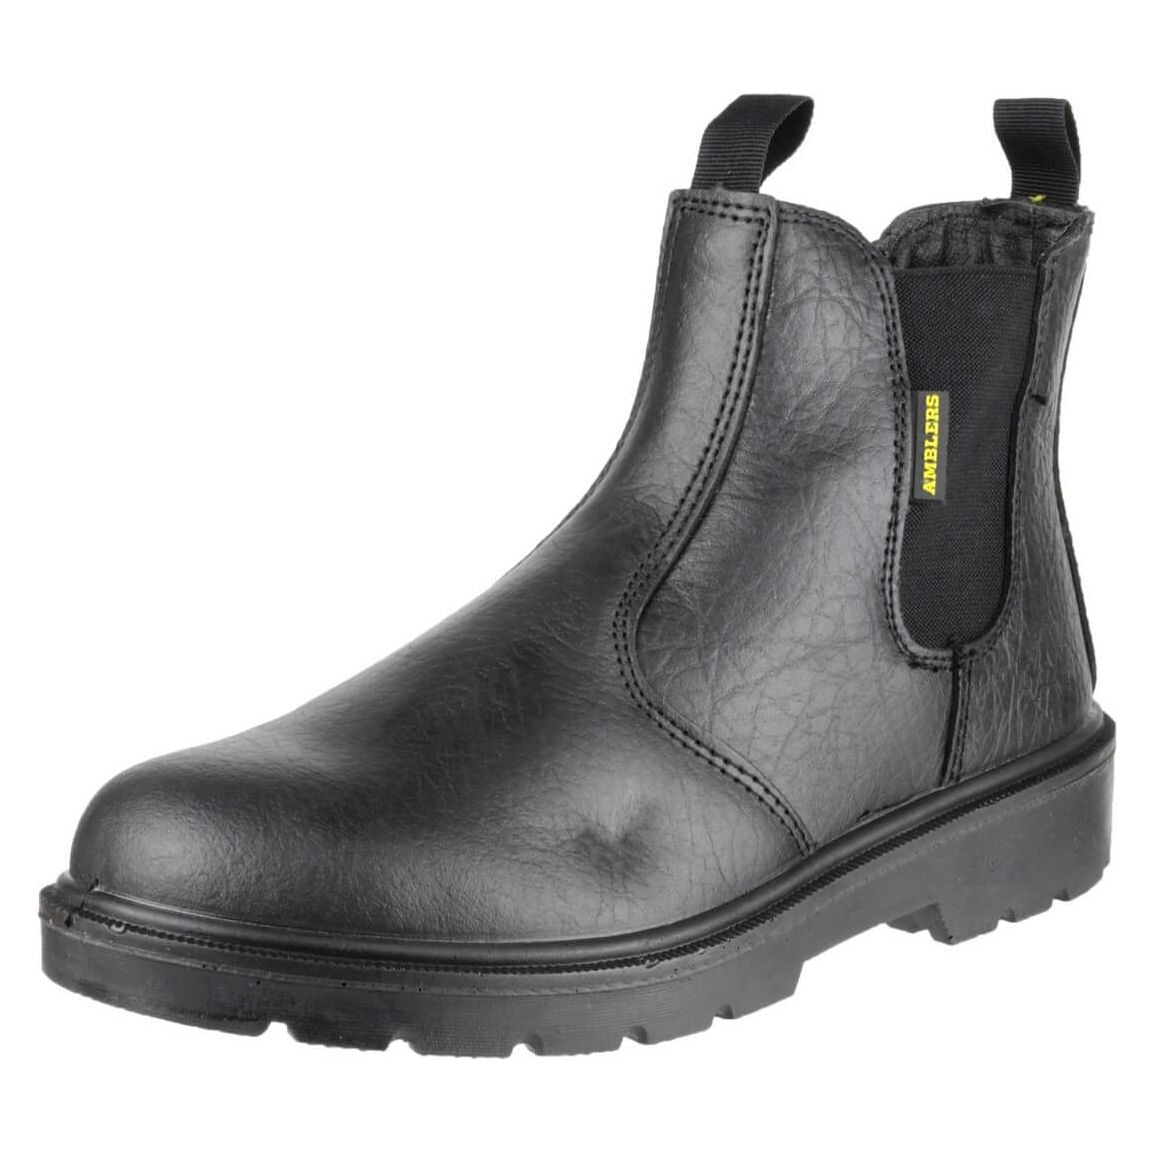 Amblers Fs116 Safety Dealer Boots Mens - workweargurus.com